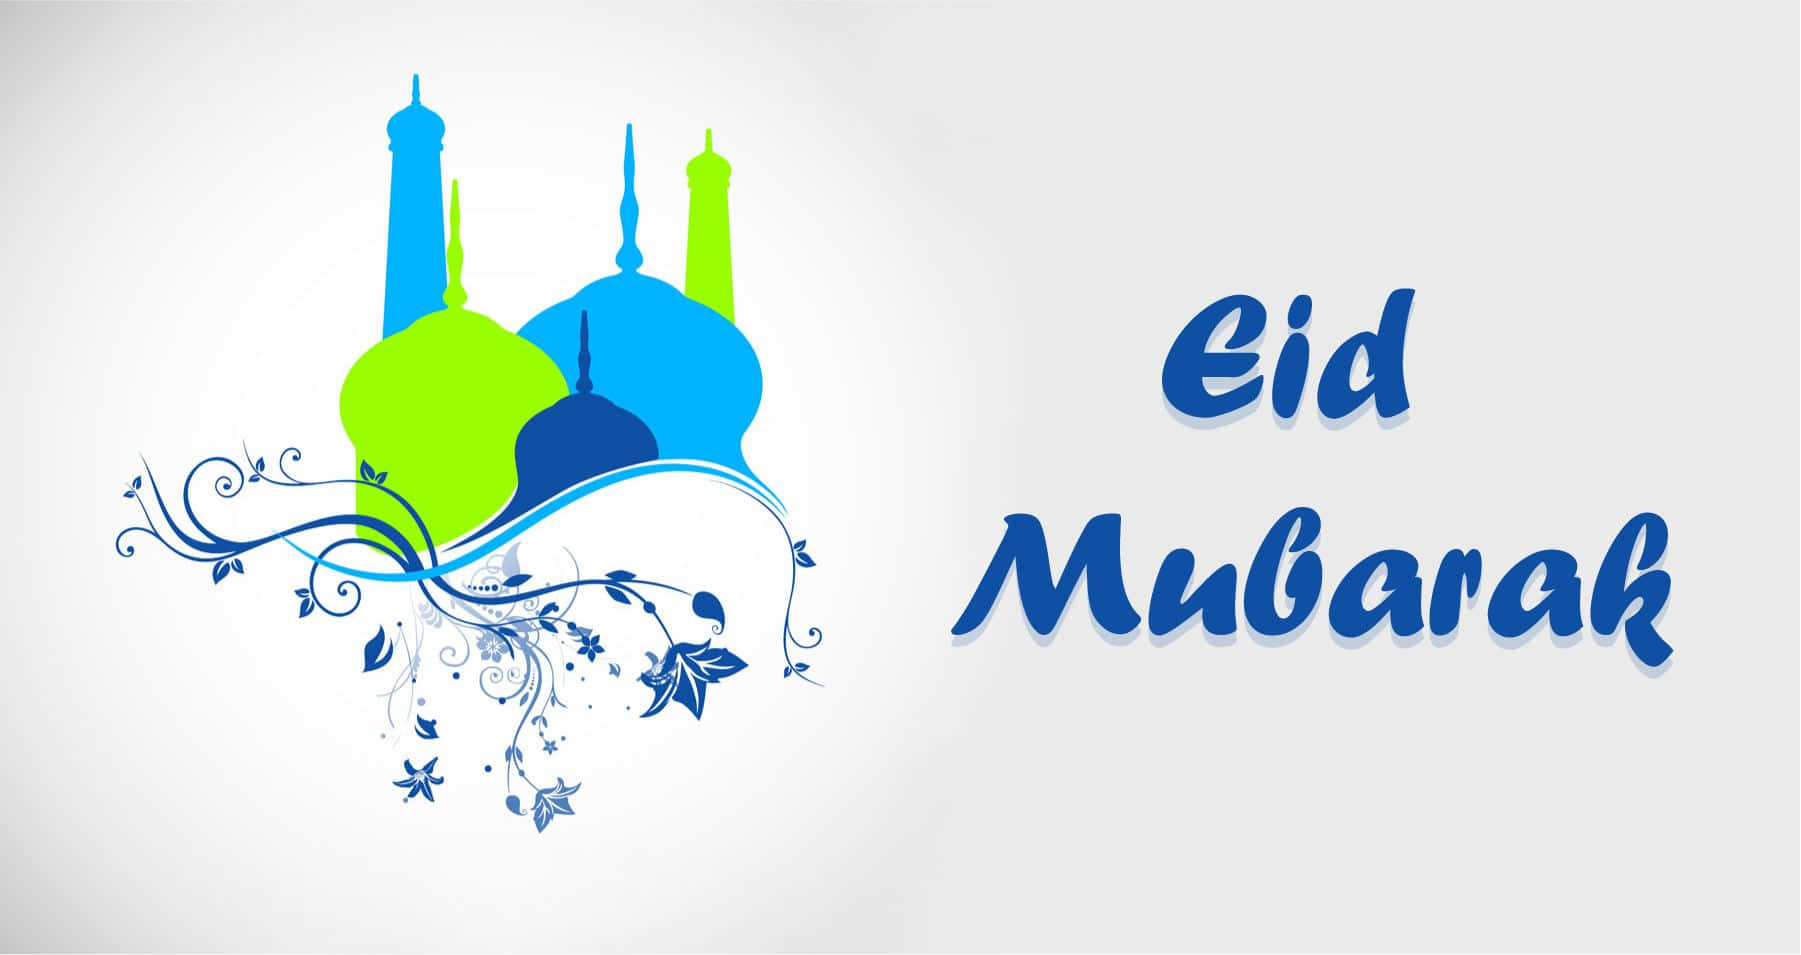 Wishing you an Eid Mubarak full of joy, love, and blessings!